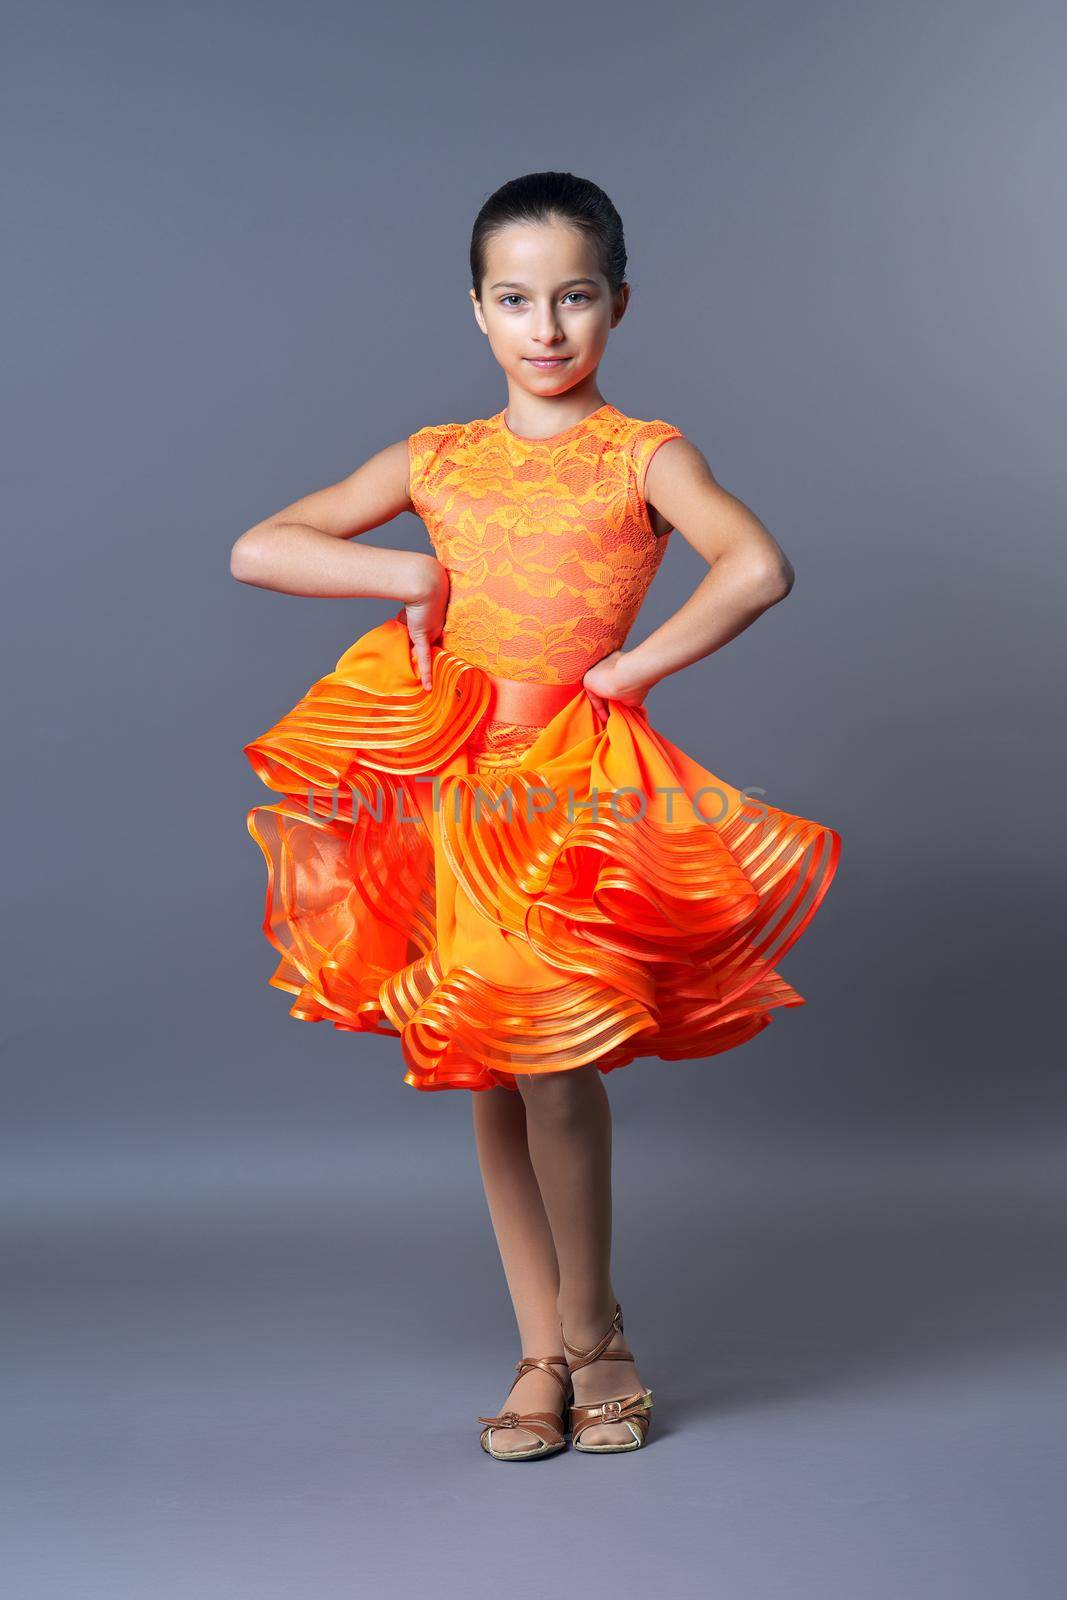 Kids sport dancing, kid girl in orange sport dress posing in dance pose looking at camera on gray studio background.